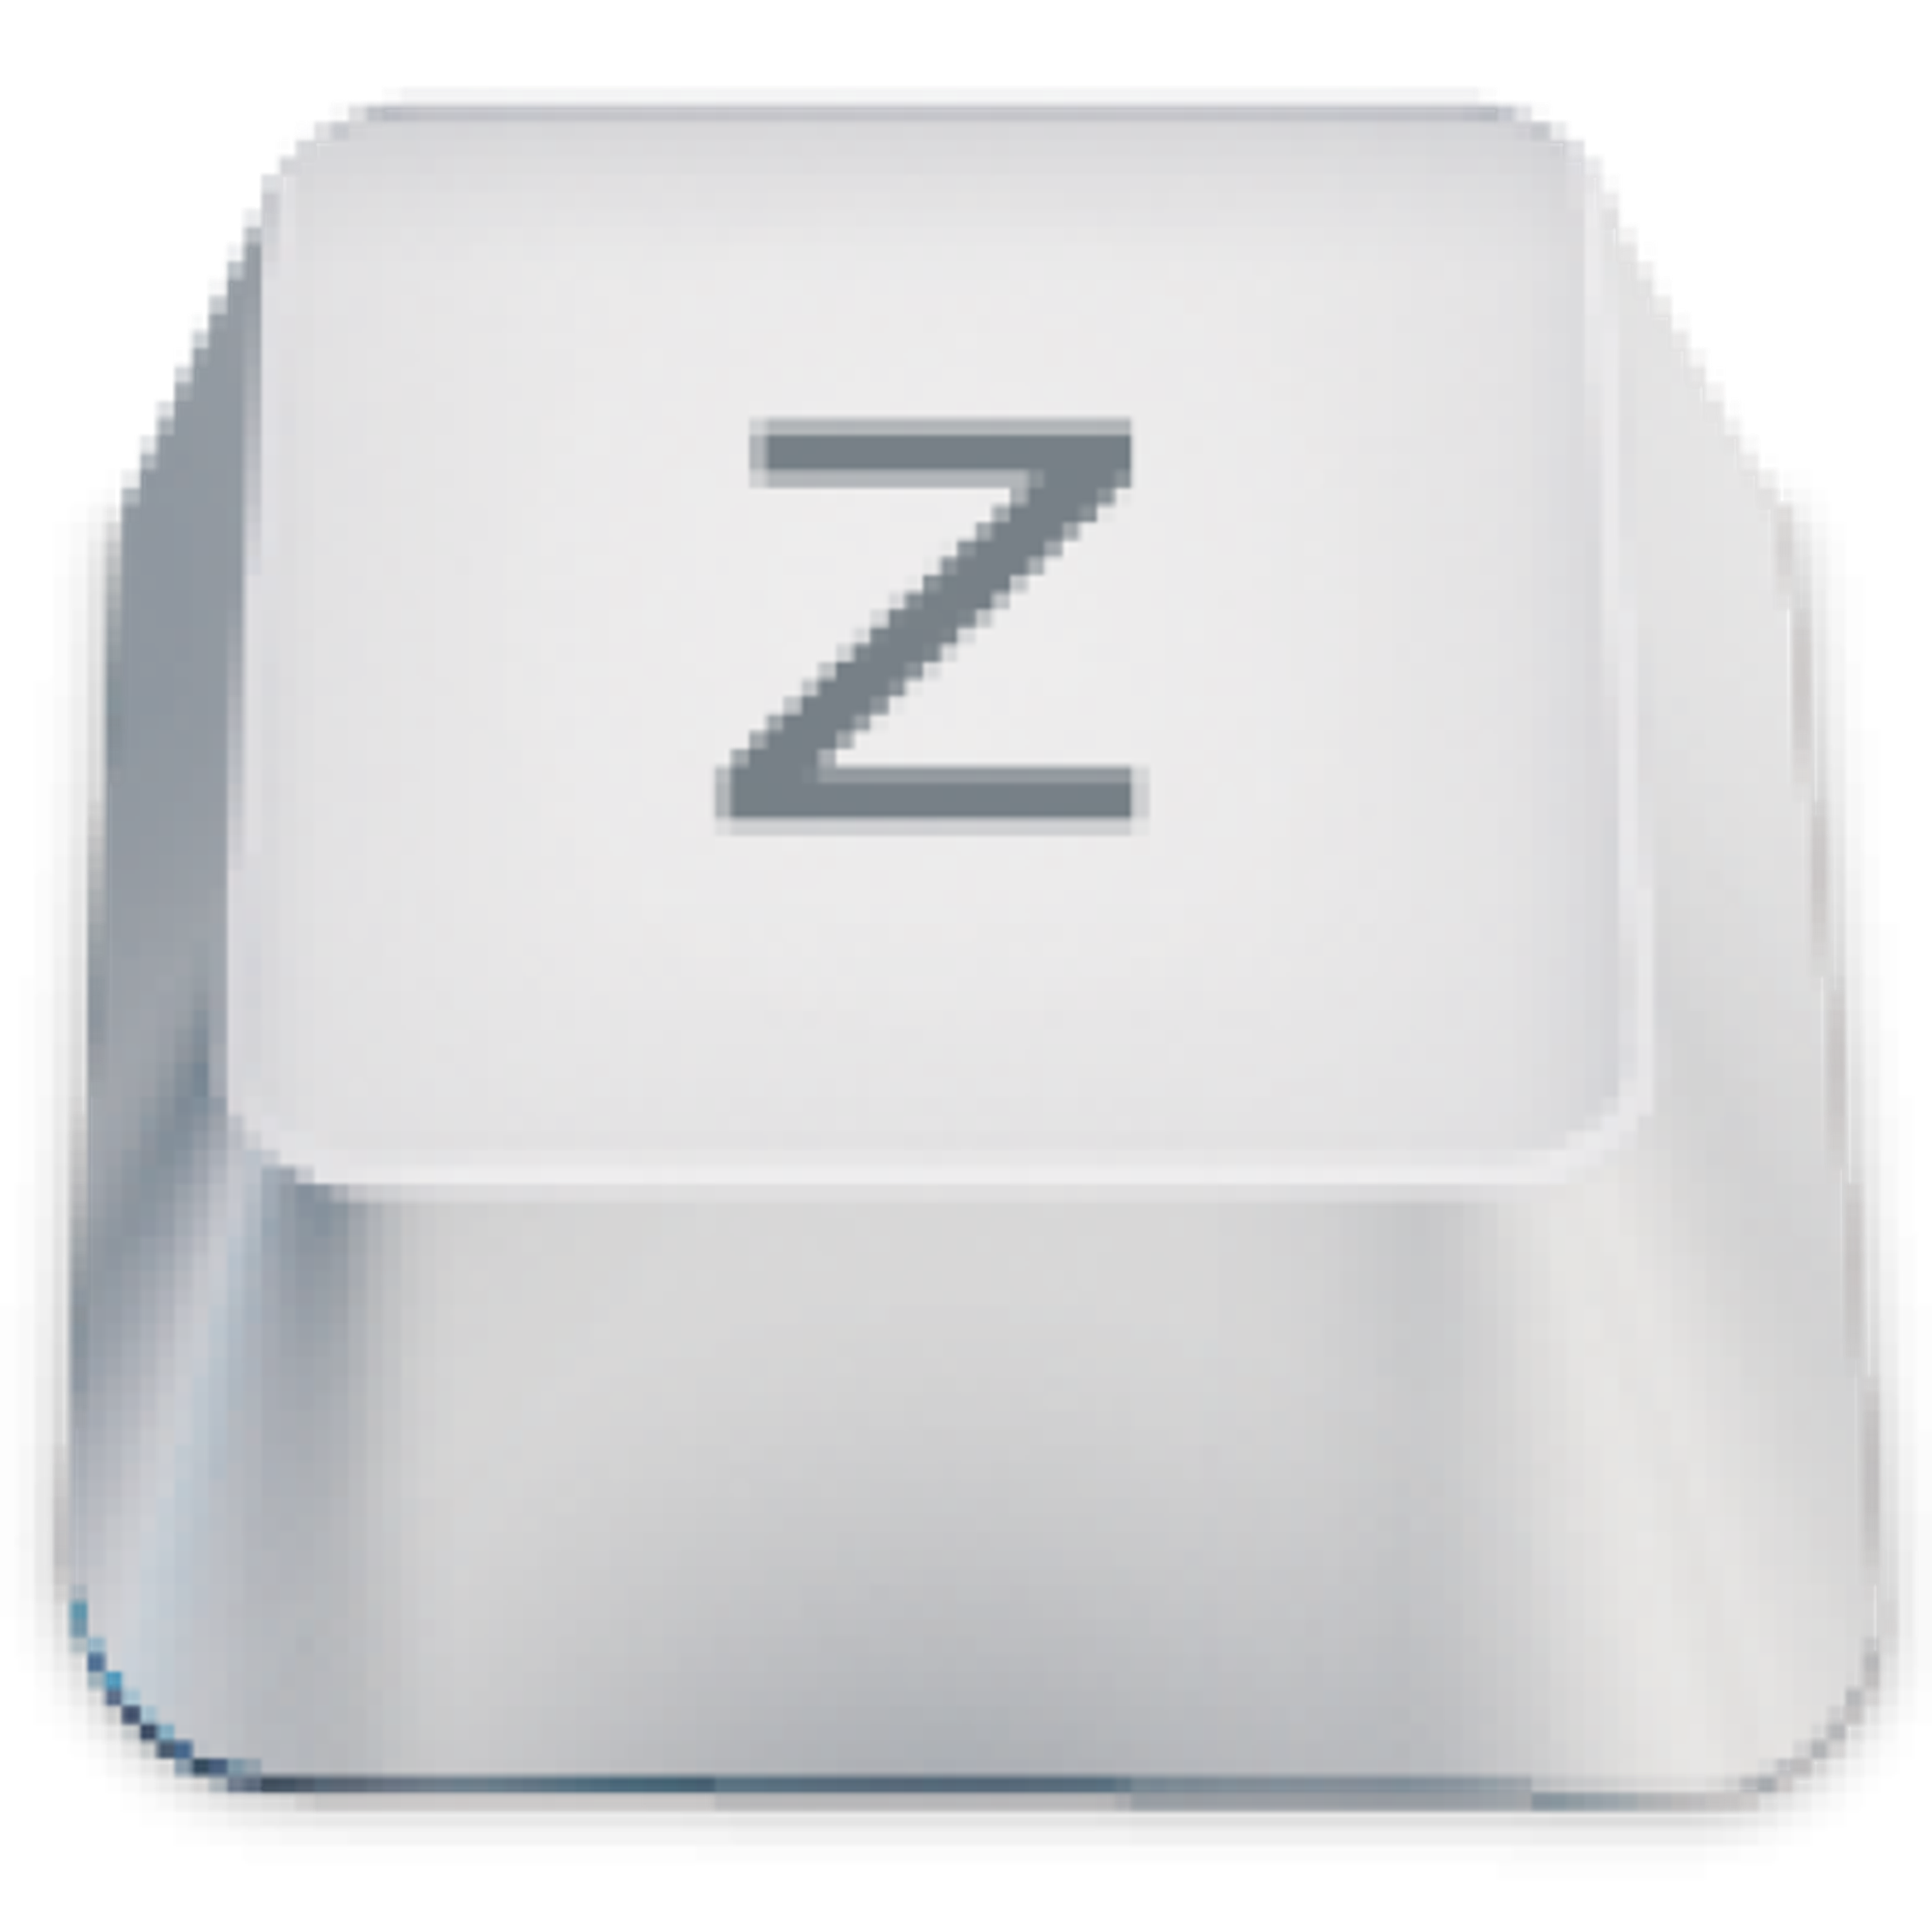 zsh-users/zsh-syntax-highlighting